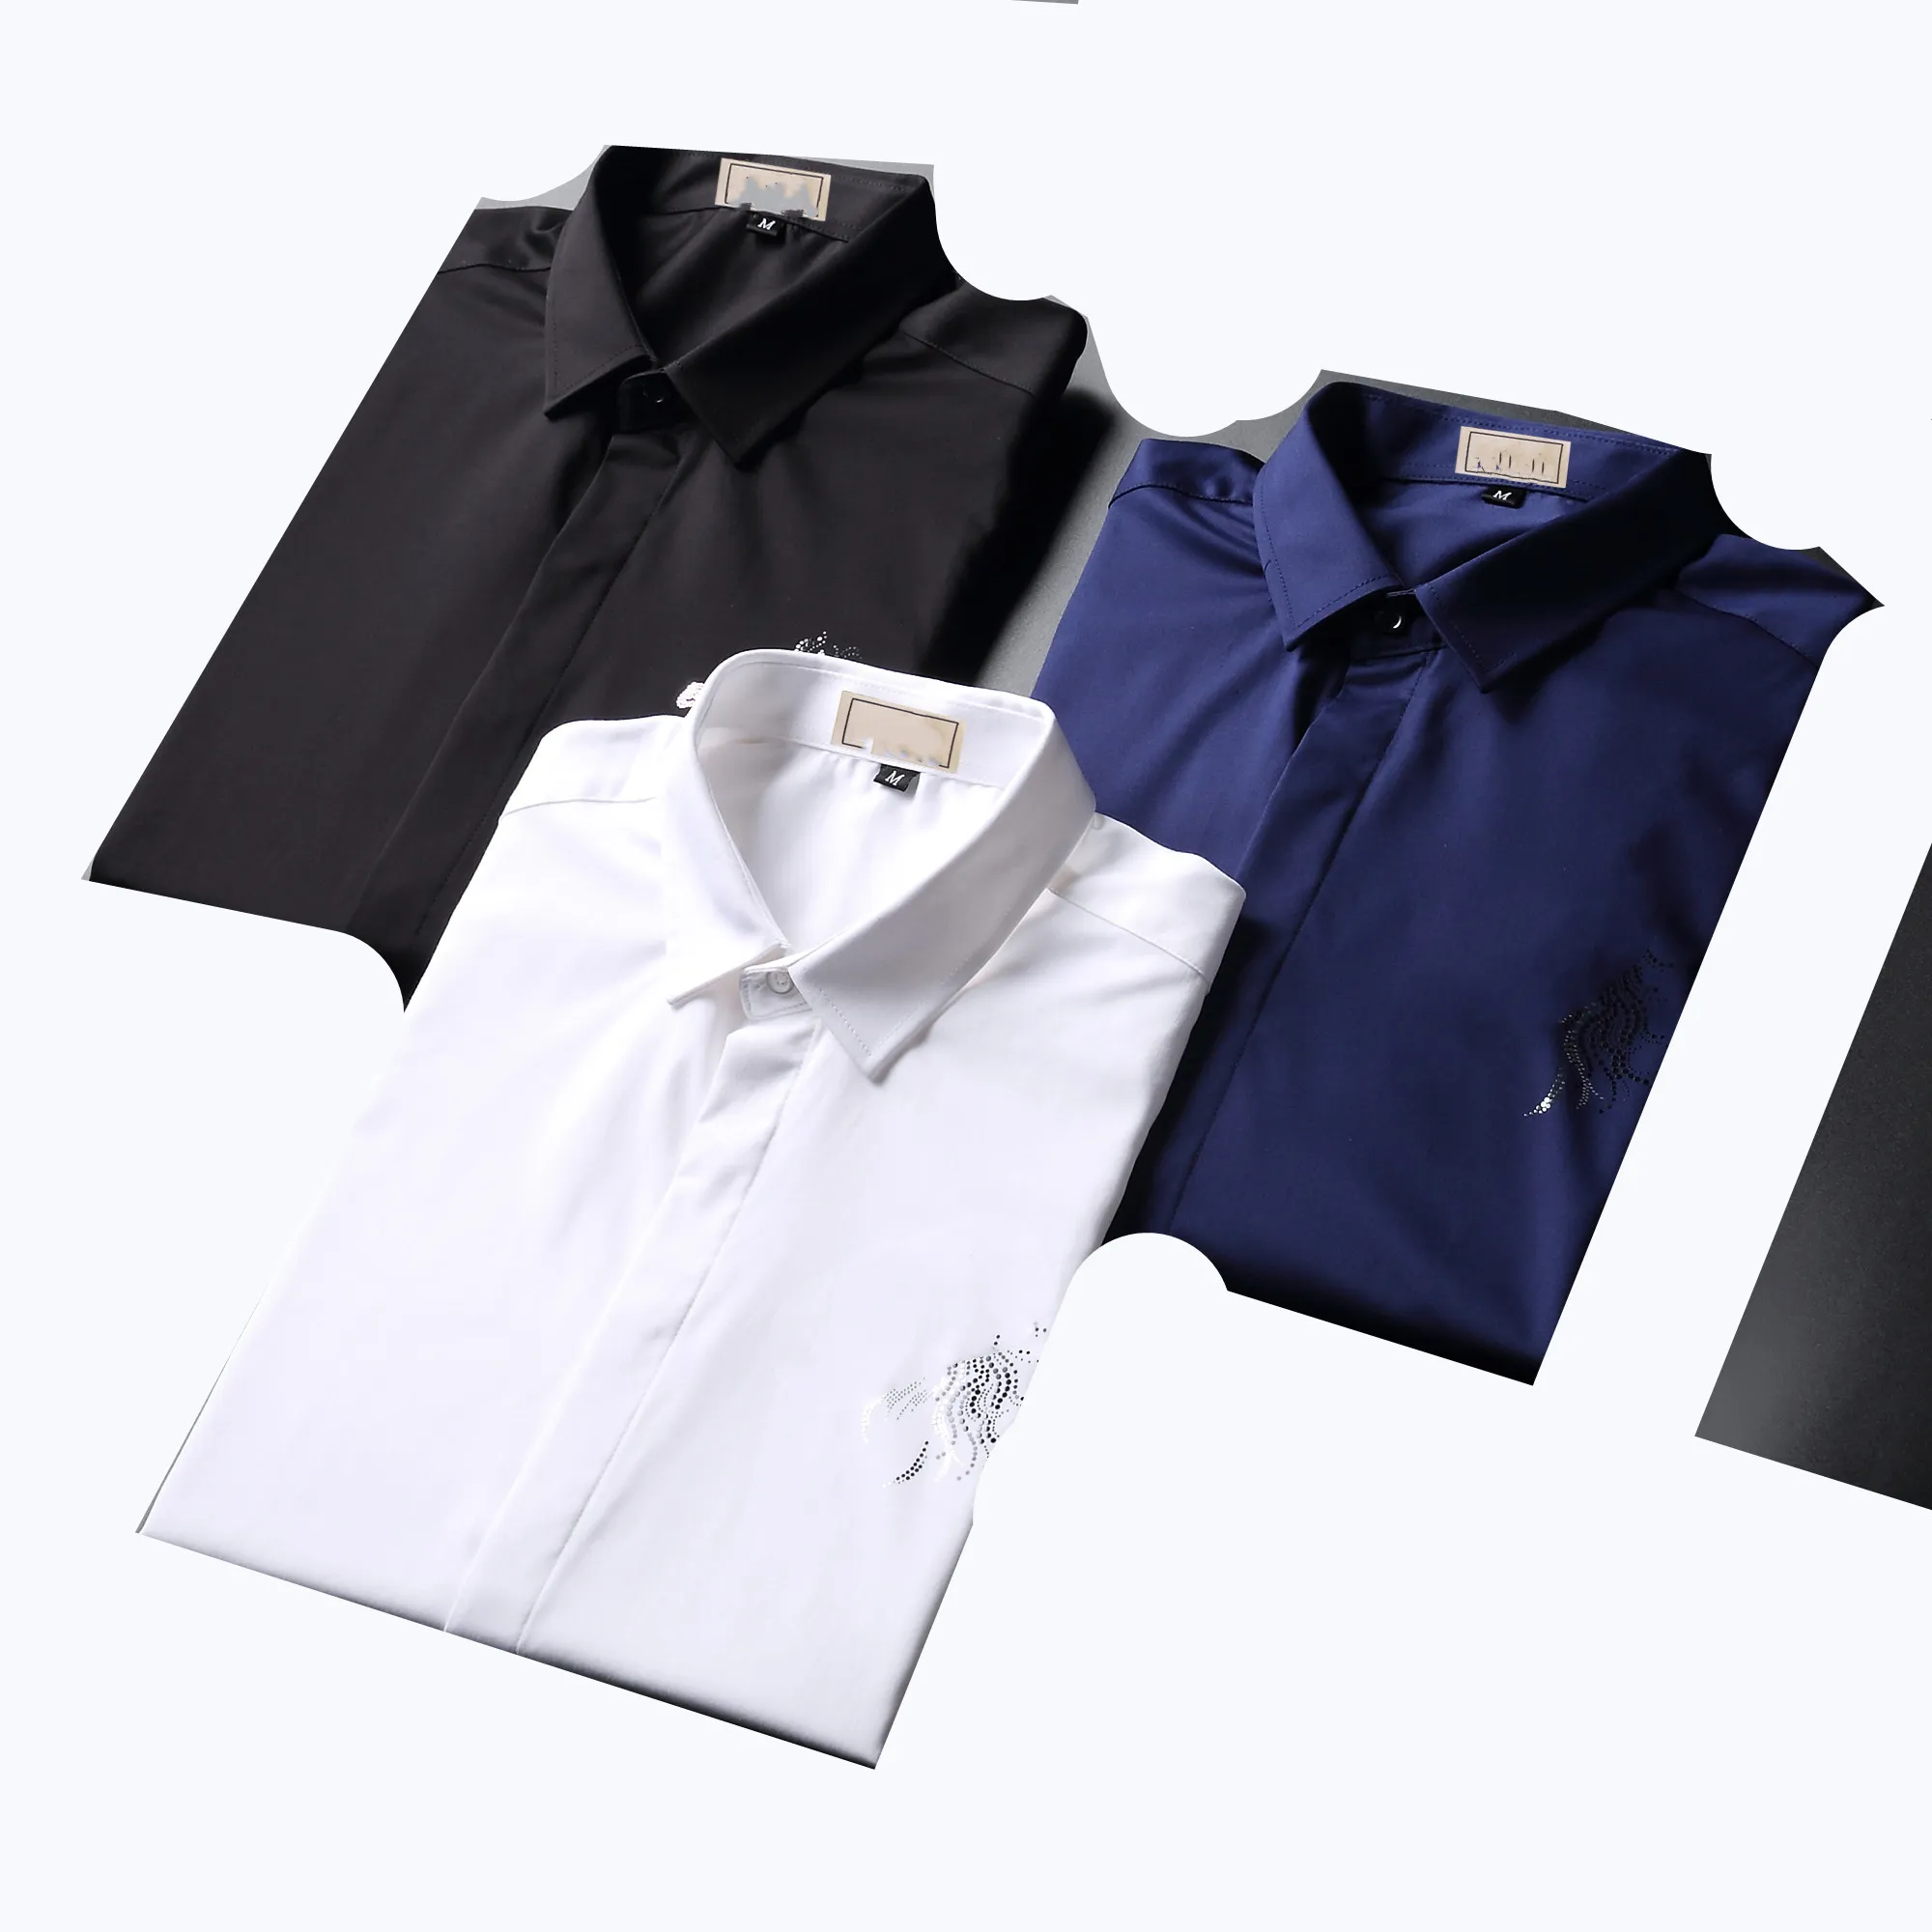 2021 Designers Mens Jurk Zakelijke Mode Casual Shirt Merken Mannen Spring Slim Fit Shirts Chemises de Marque Giet Hommes # M-3XLMEN17